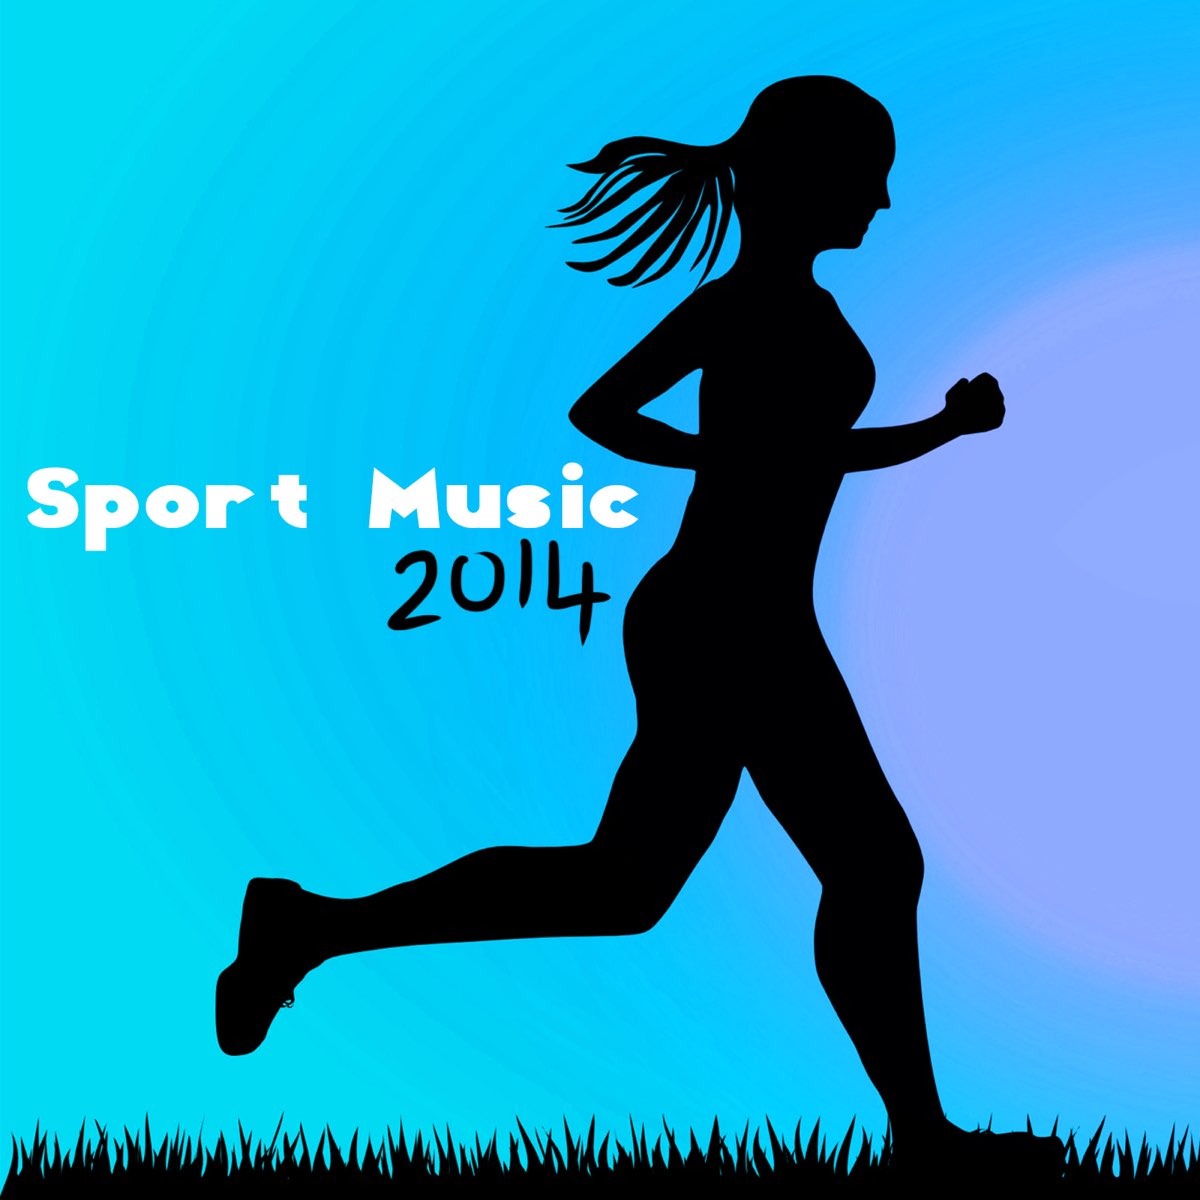 Music for sports. Мьюзик спорт. Sports and Music. Бег с музыкой. Музыка и спорт картинки.